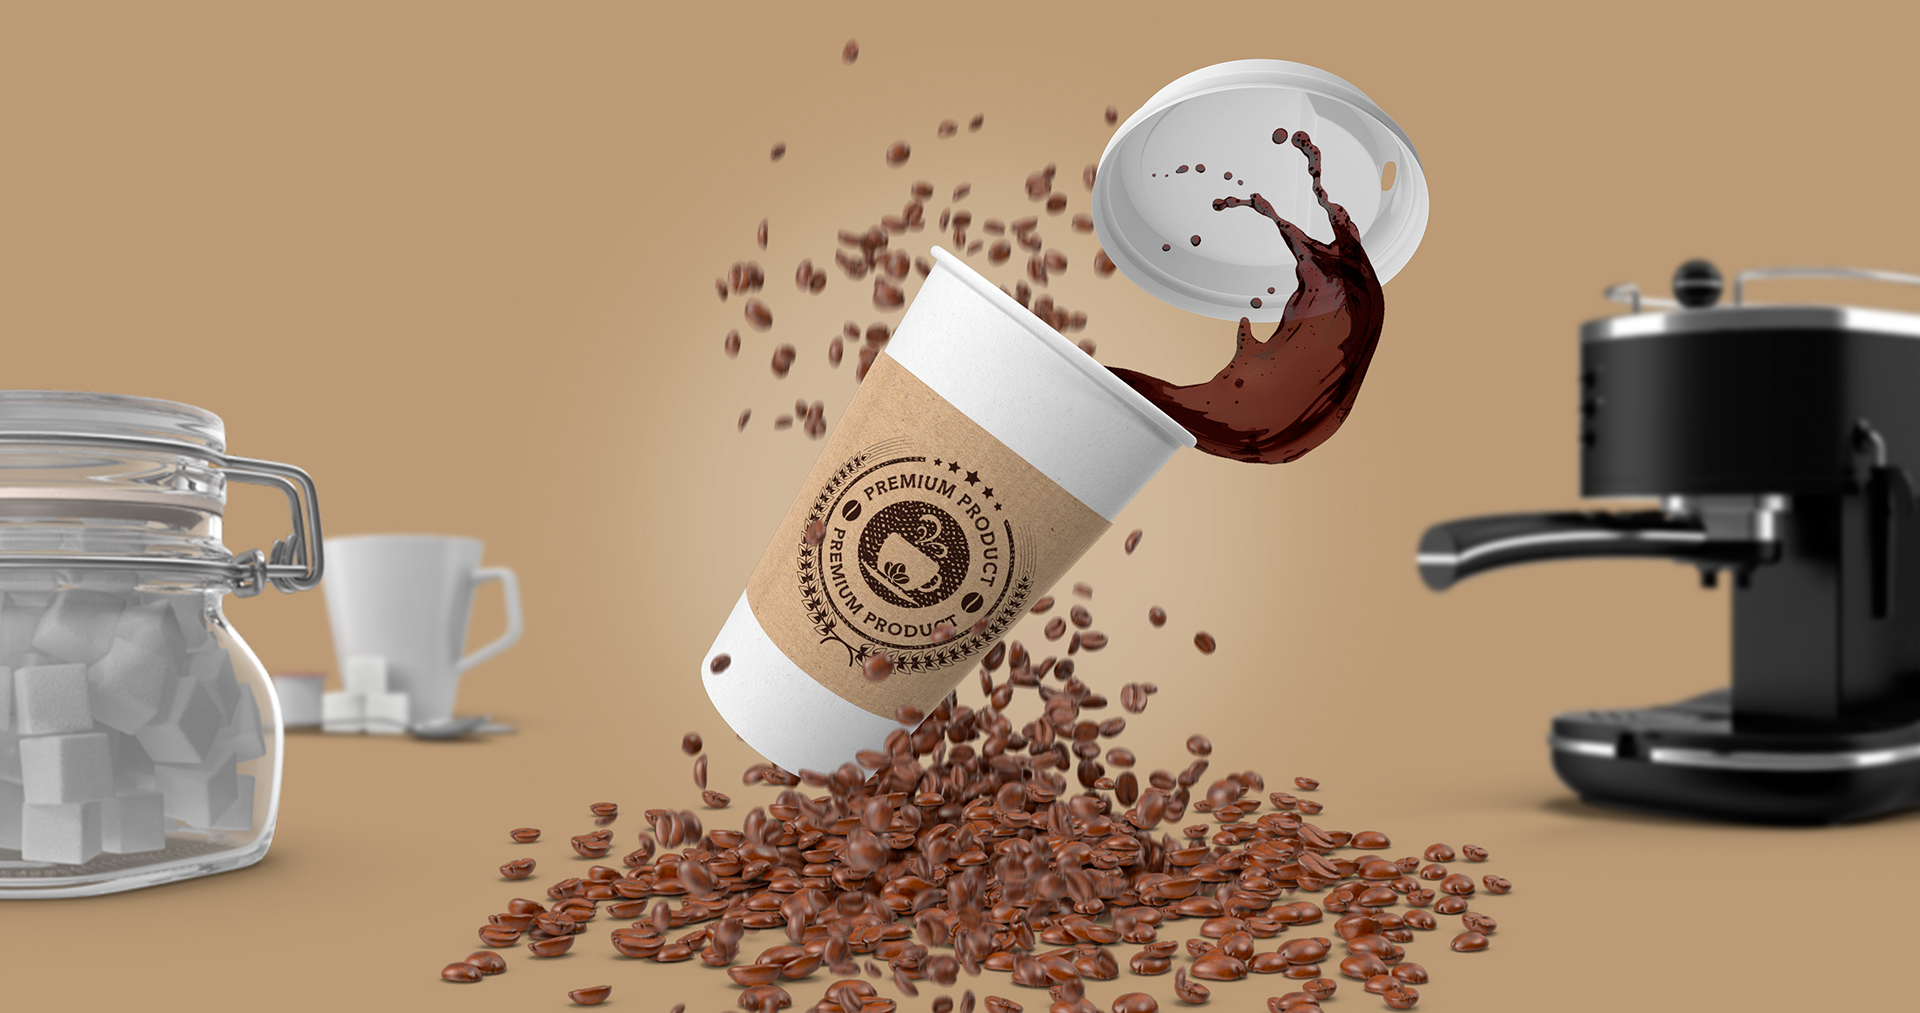 Download 30+ Coffee Branding & Packaging Mockups | Decolore.Net